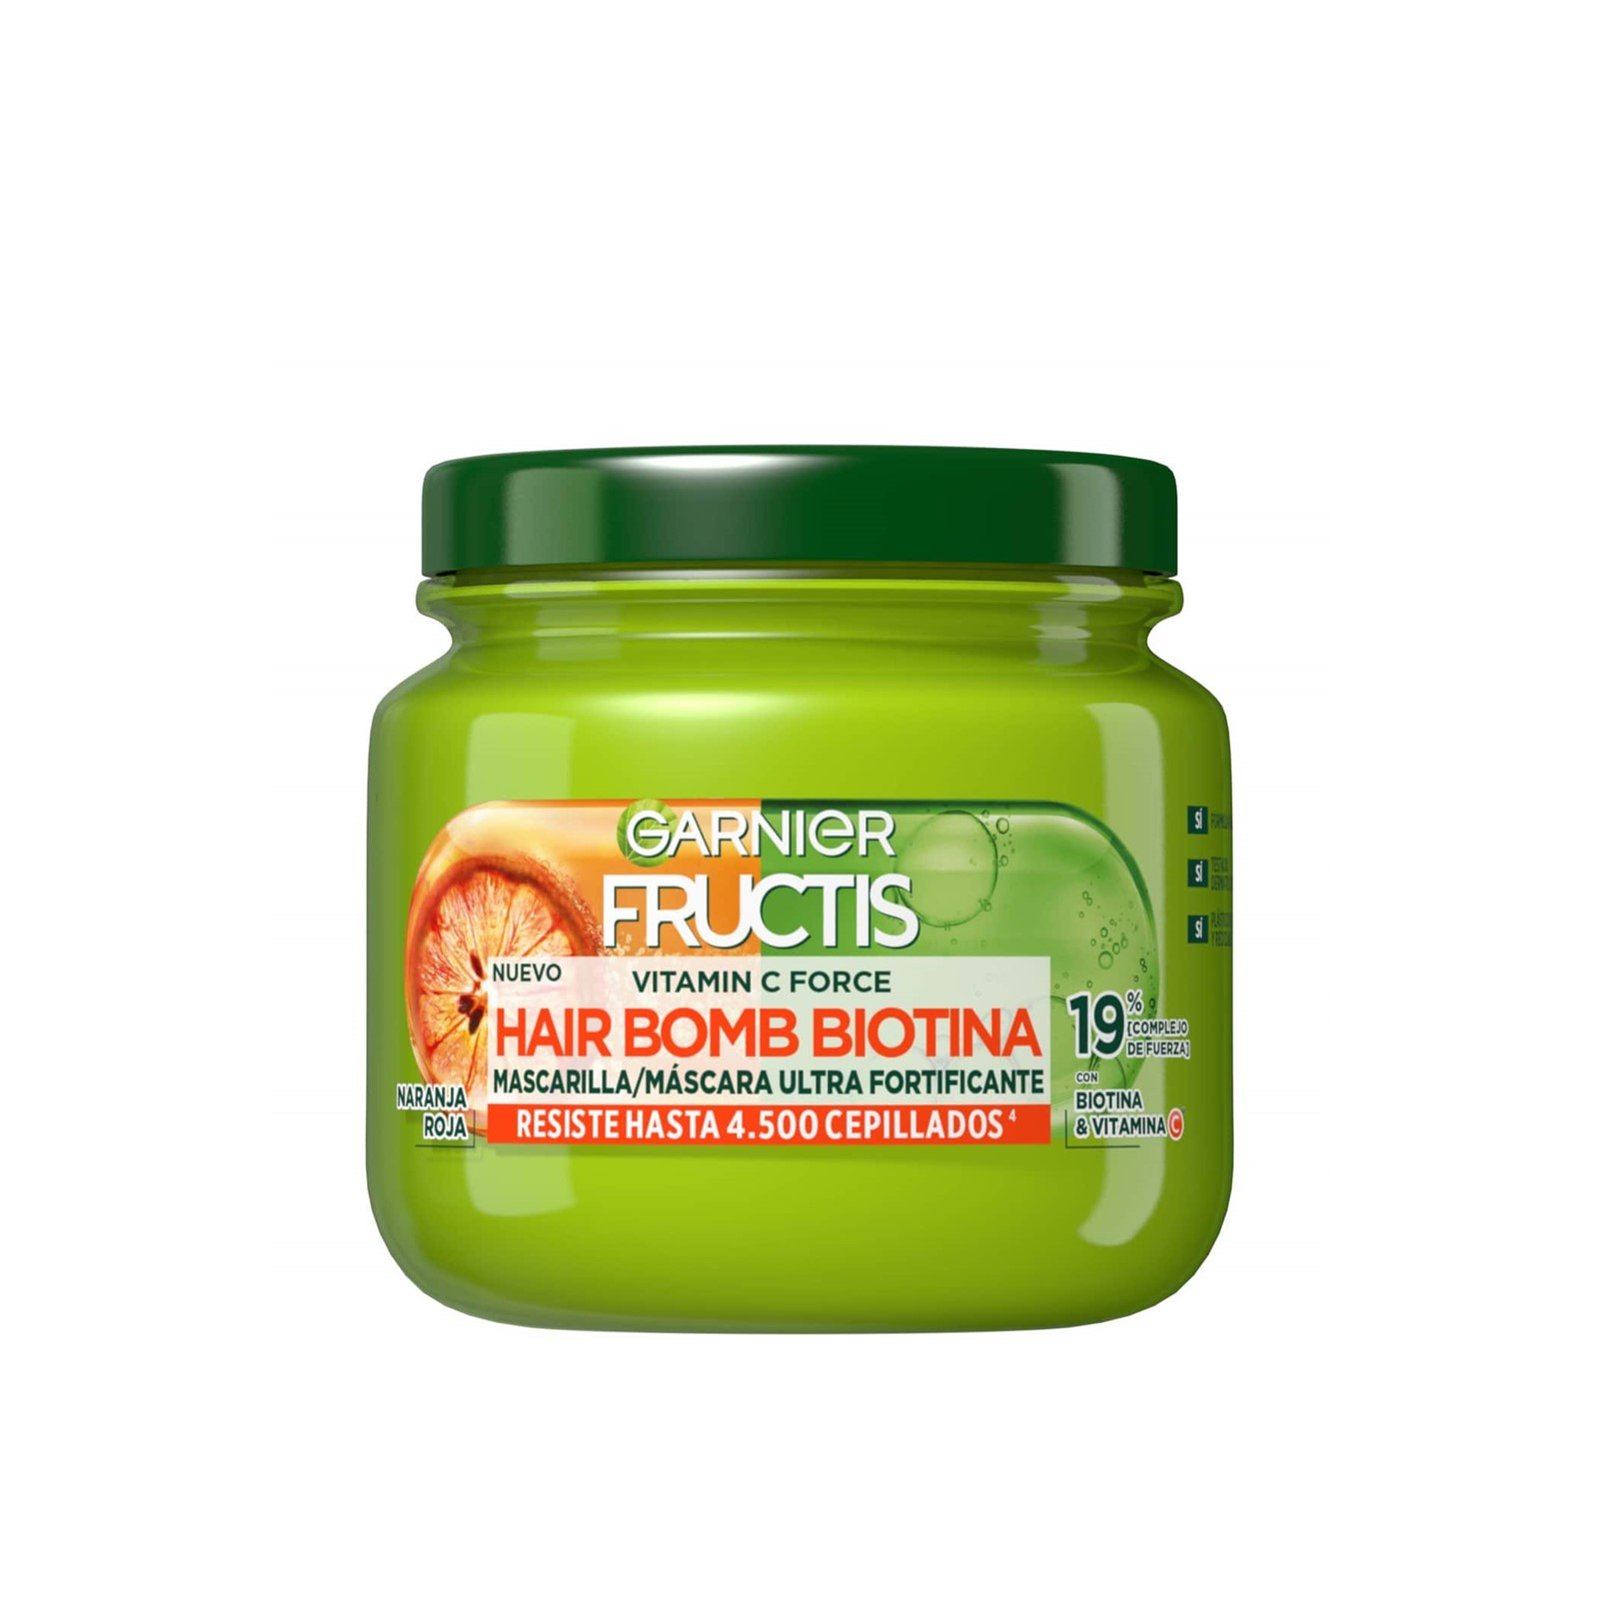 Garnier Fructis Vitamin C Force Hair Bomb Biotin Mask 320ml (10.8 fl oz)